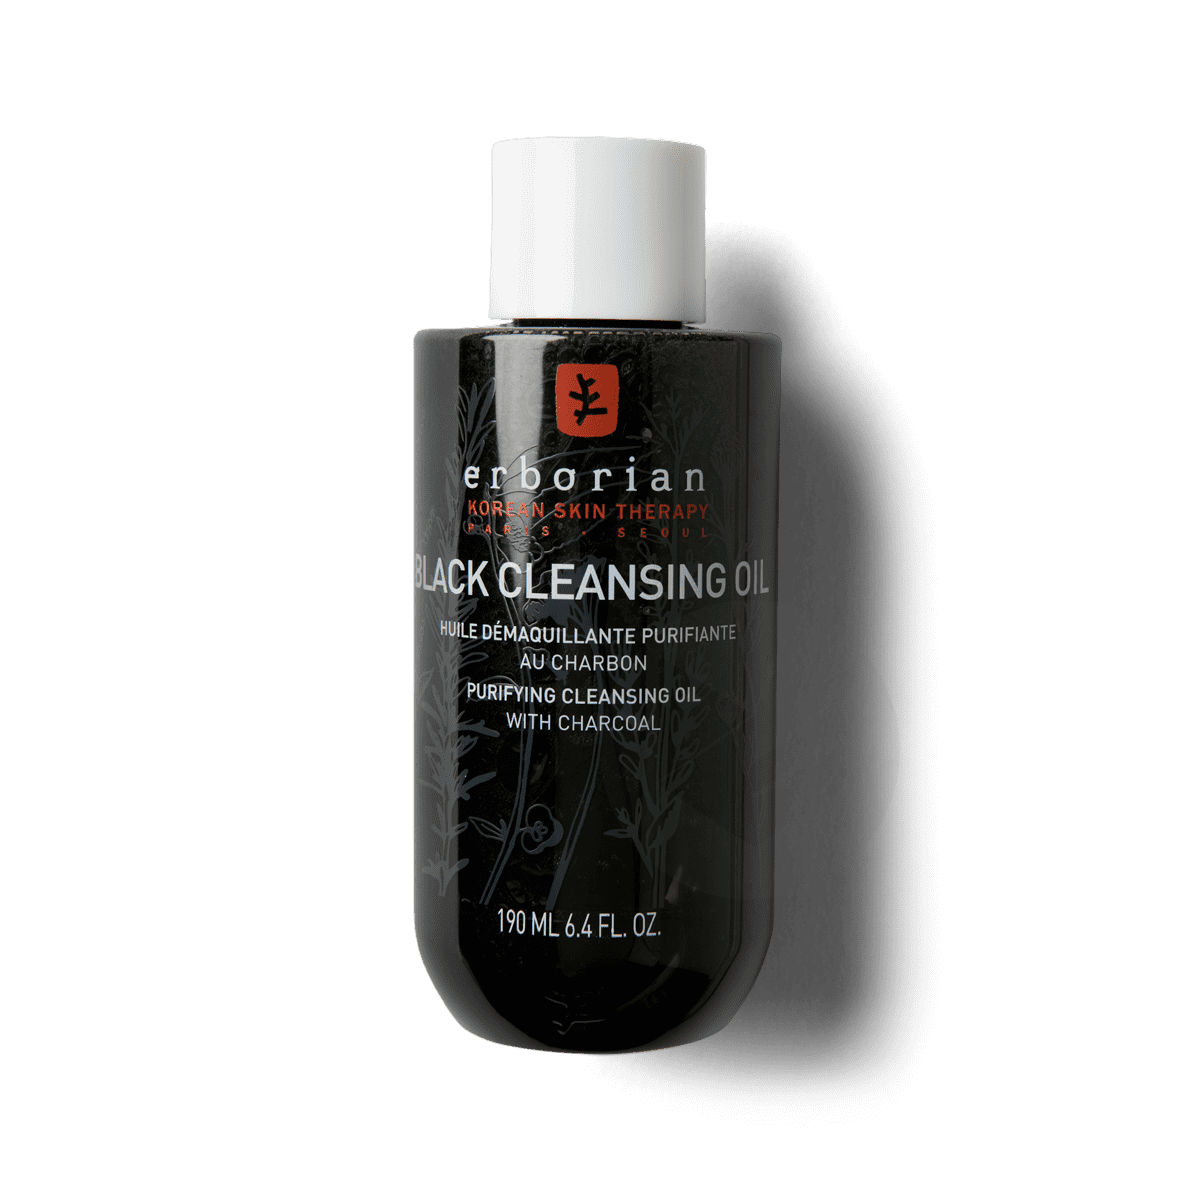 Black Cleansing Oil 190ml